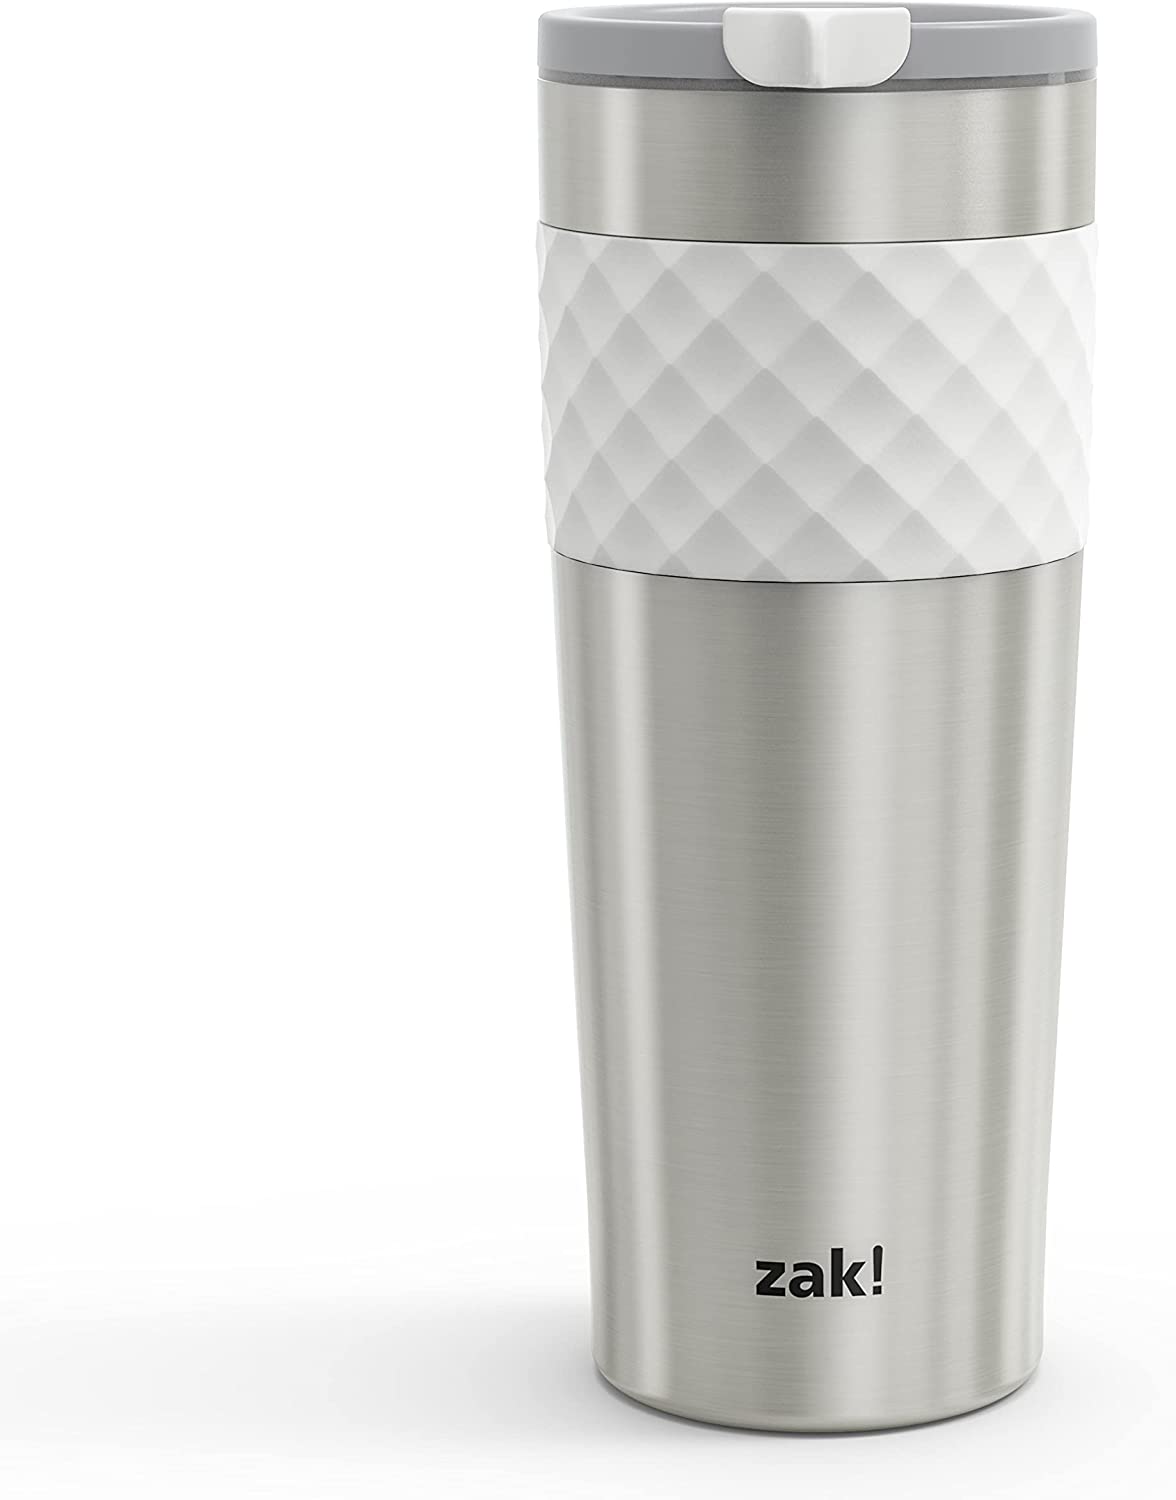 24 oz. Zak Designs Aberdeen Vacuum Insulated 18/8 Stainless Steel Travel Tumbler (White) $10.88 + Free Ship w/Prime